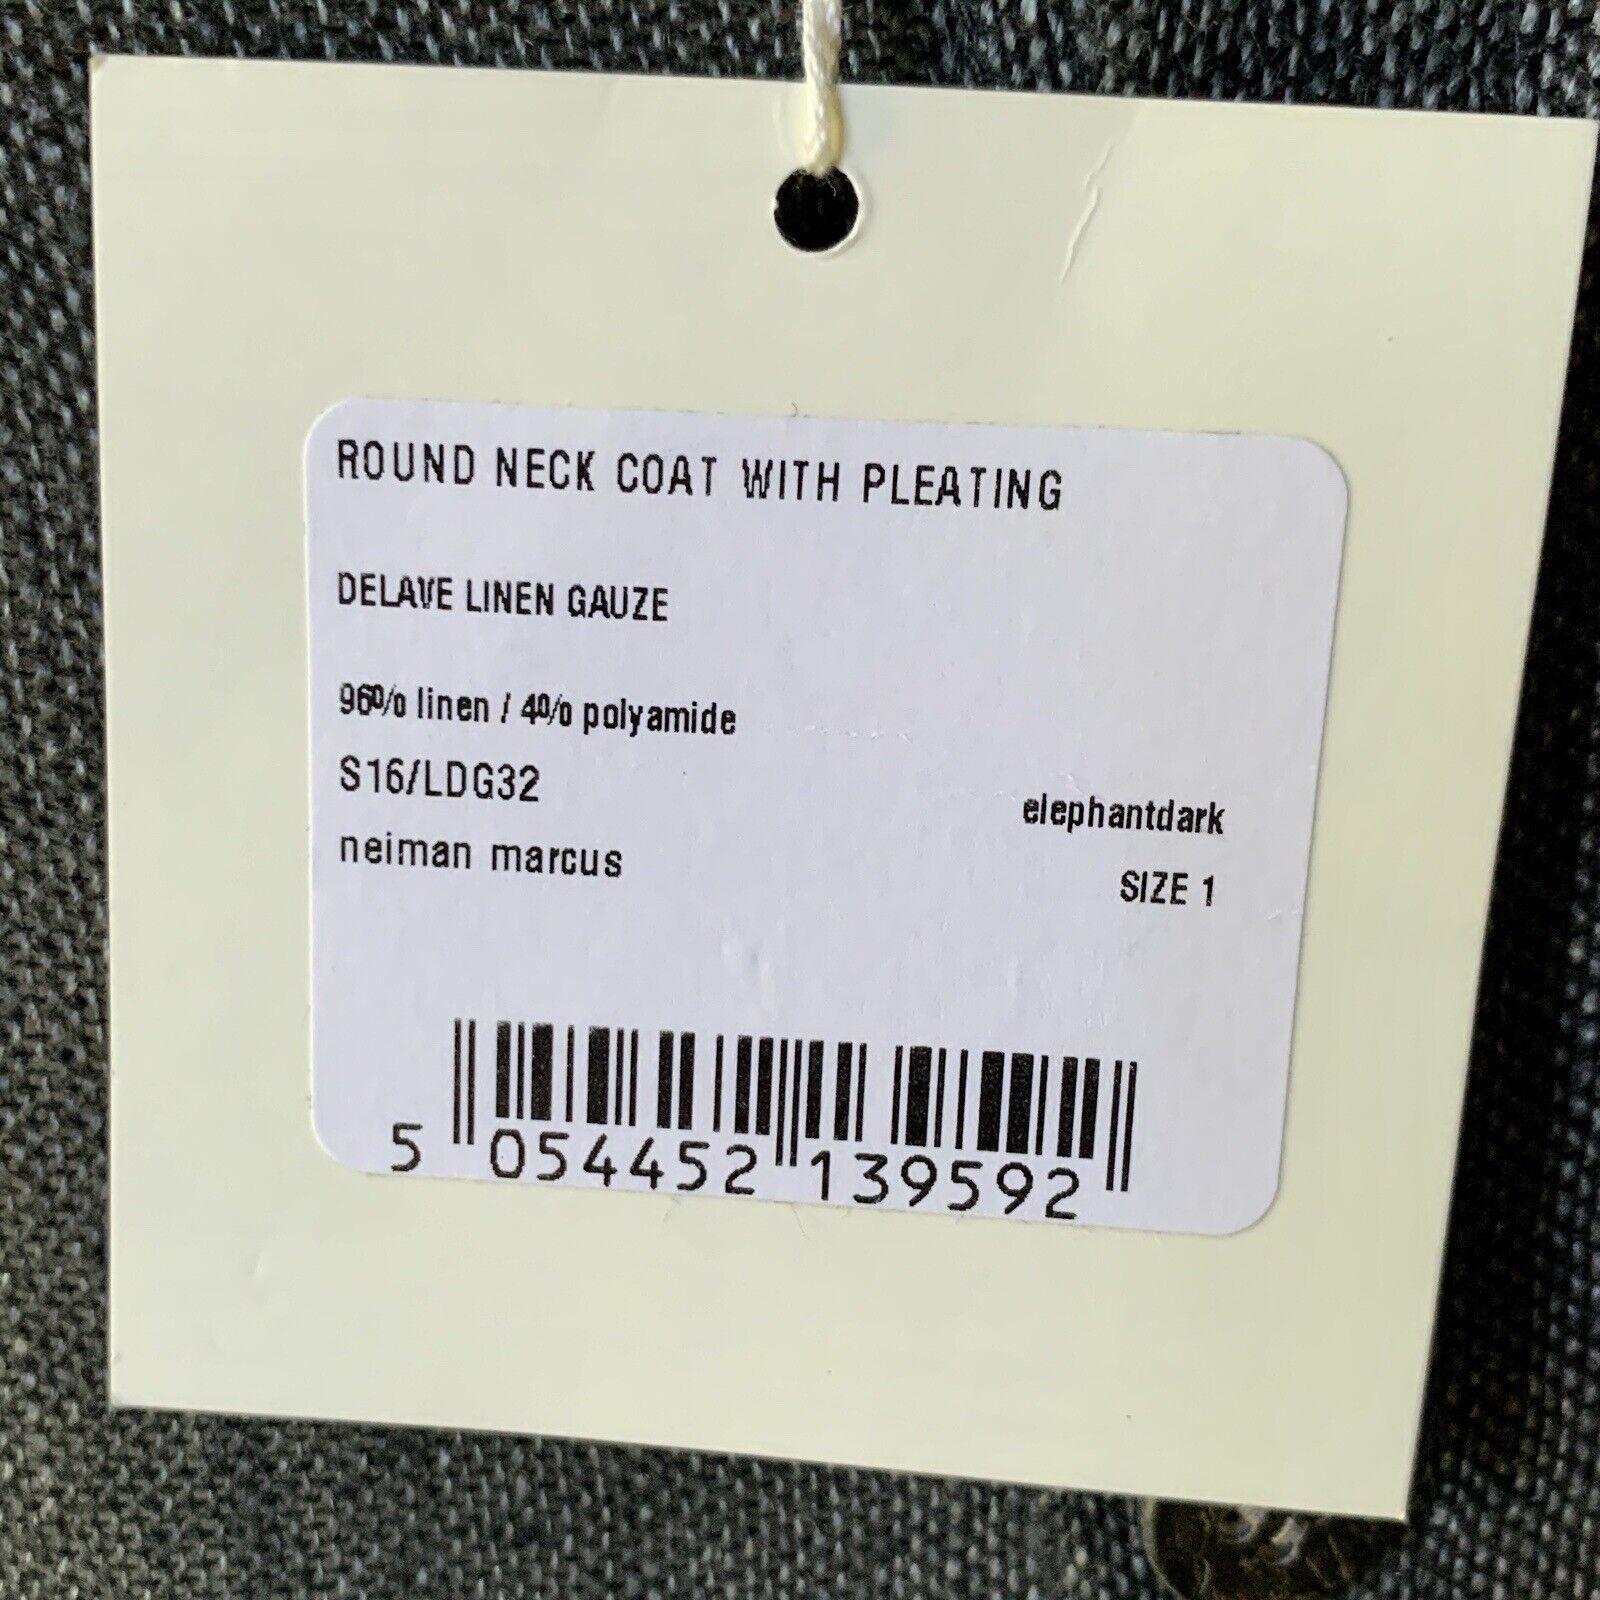 Rare ESKANDAR Delave Linen Gauze Round Neck Coat Pleating ELEPHANTDARK NWT SZ 1 For Sale 6